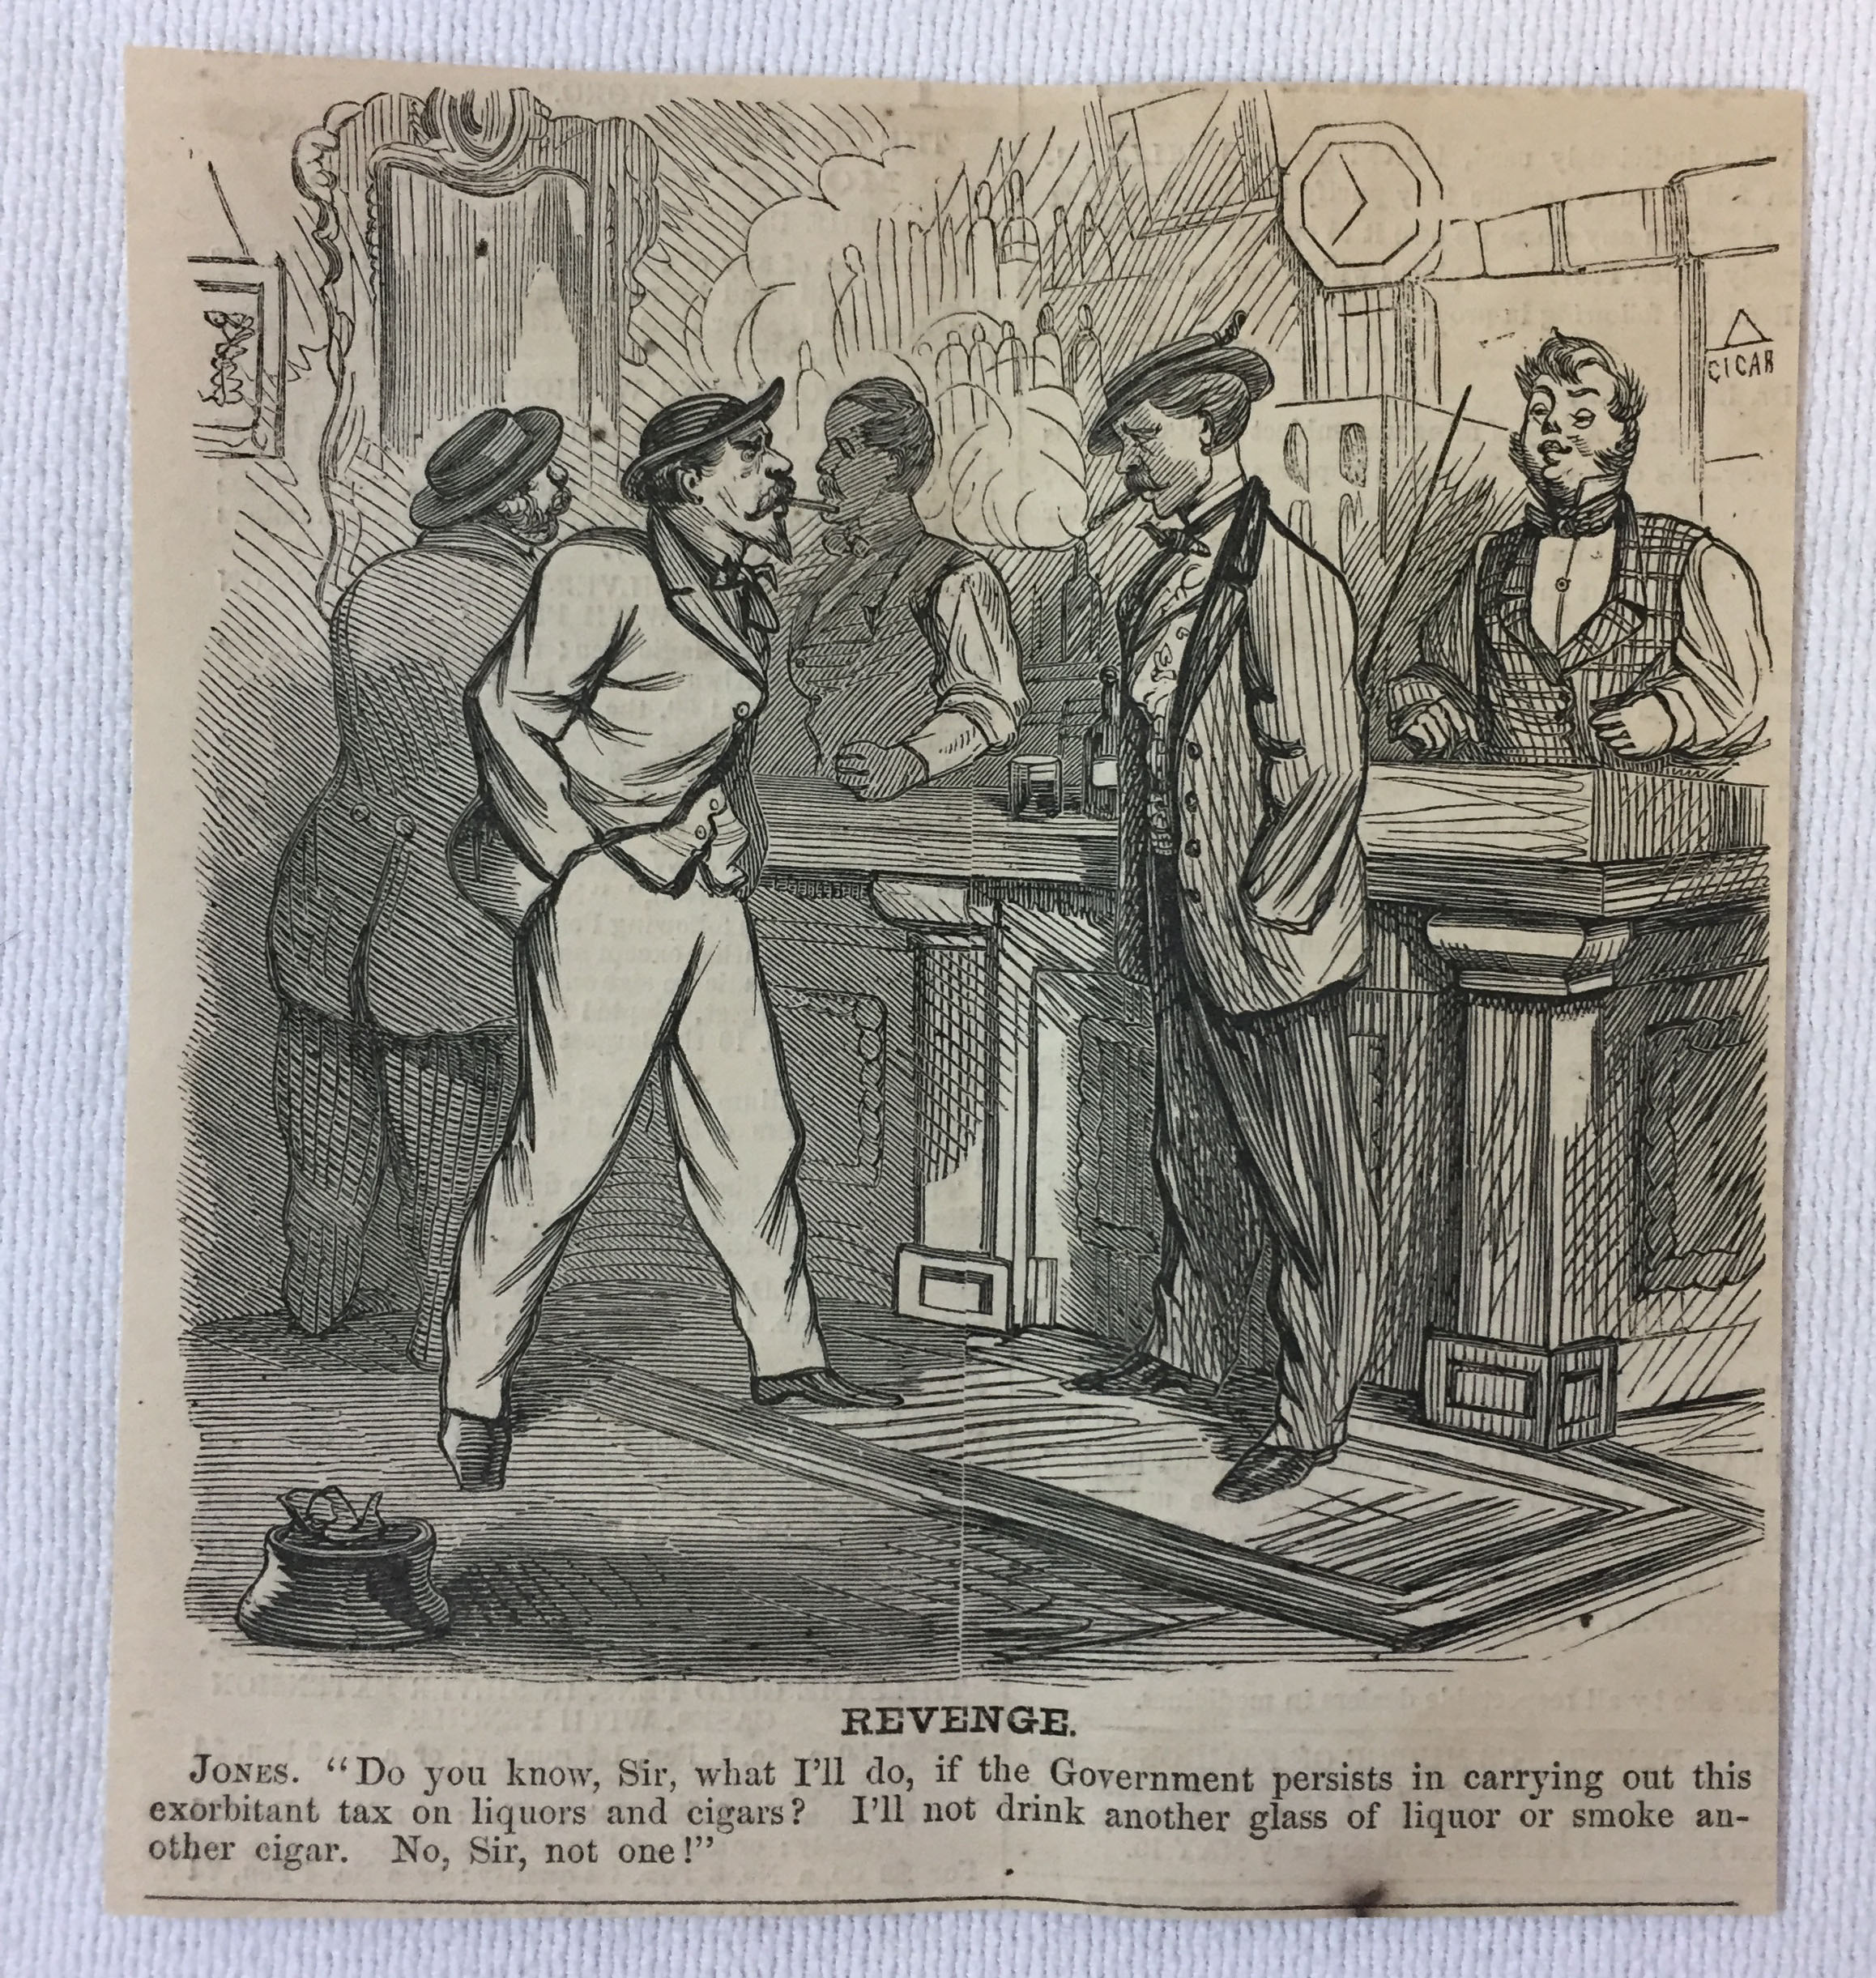 1864-newspaper-cartoon-revenge-on-liquor-and-cigar-taxes-ebay